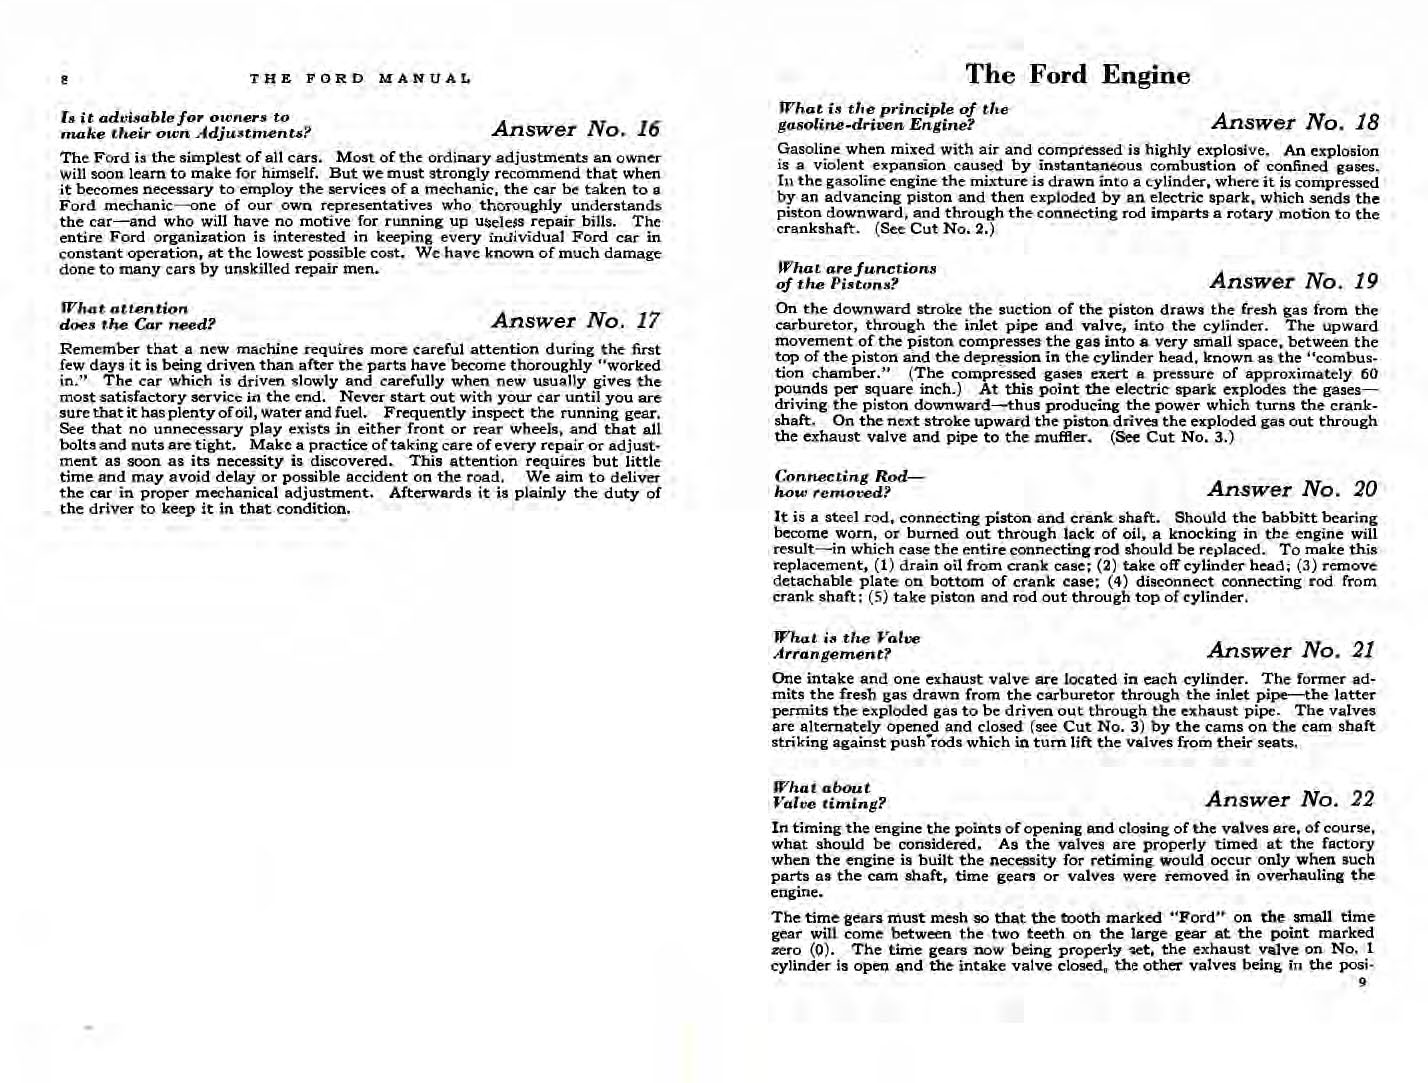 1922_Ford_Manual-08-09